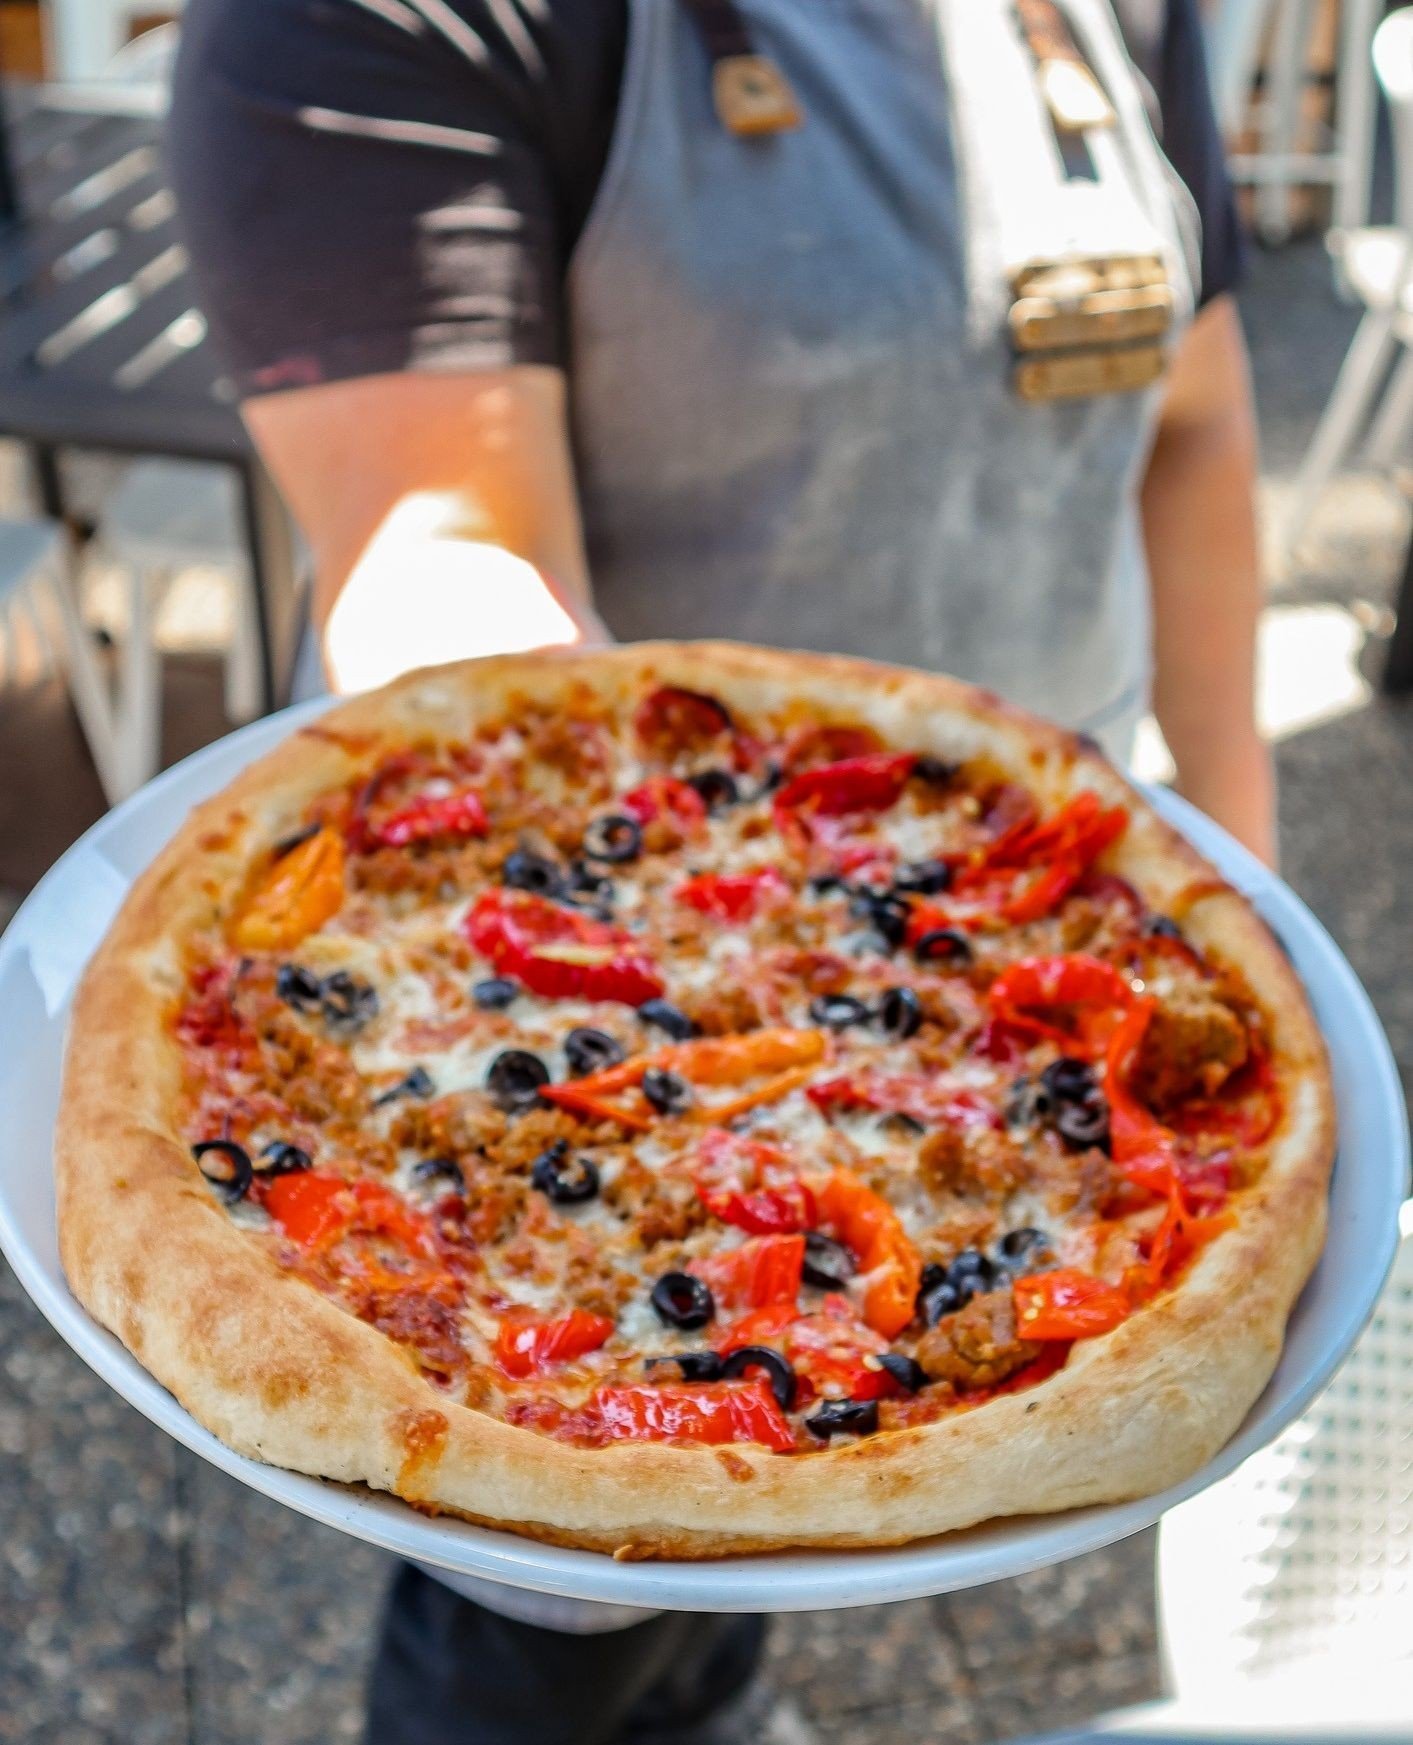 Award-winning-pizza, gotta have it! 😋⁠
⁠
⁠
⁠
⁠
#basilandboard #salemoregon #salemeats #travelsalem #downtownsalem #insalemoregon #salemor #salemfood #pressplaysalem #makesalmawesome #salemisawesome #goodeats #pizza #wine #pizzaandwine #pizzalover #p